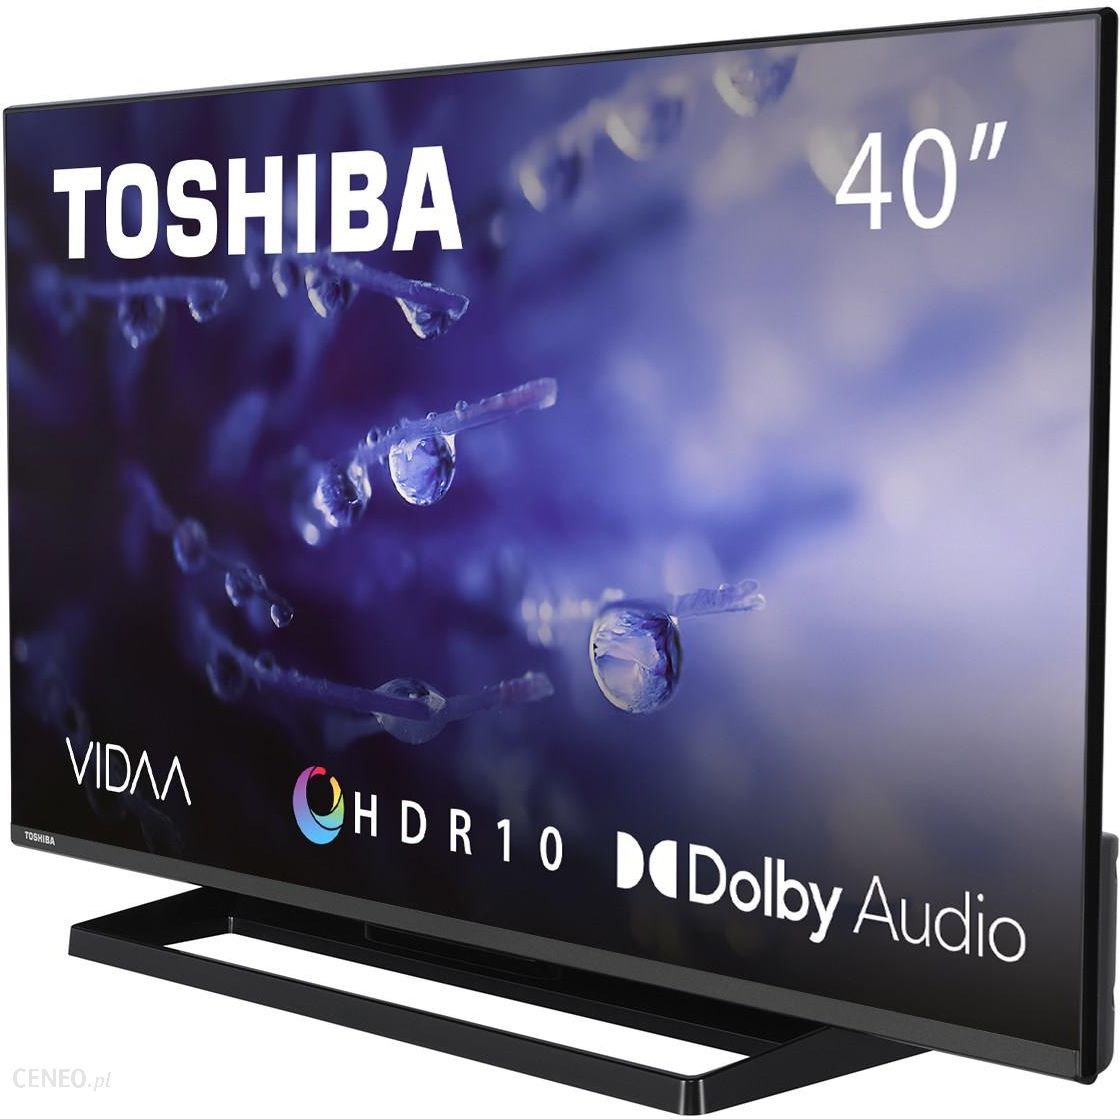 40 - 40LV3E63DG - Toshiba TV